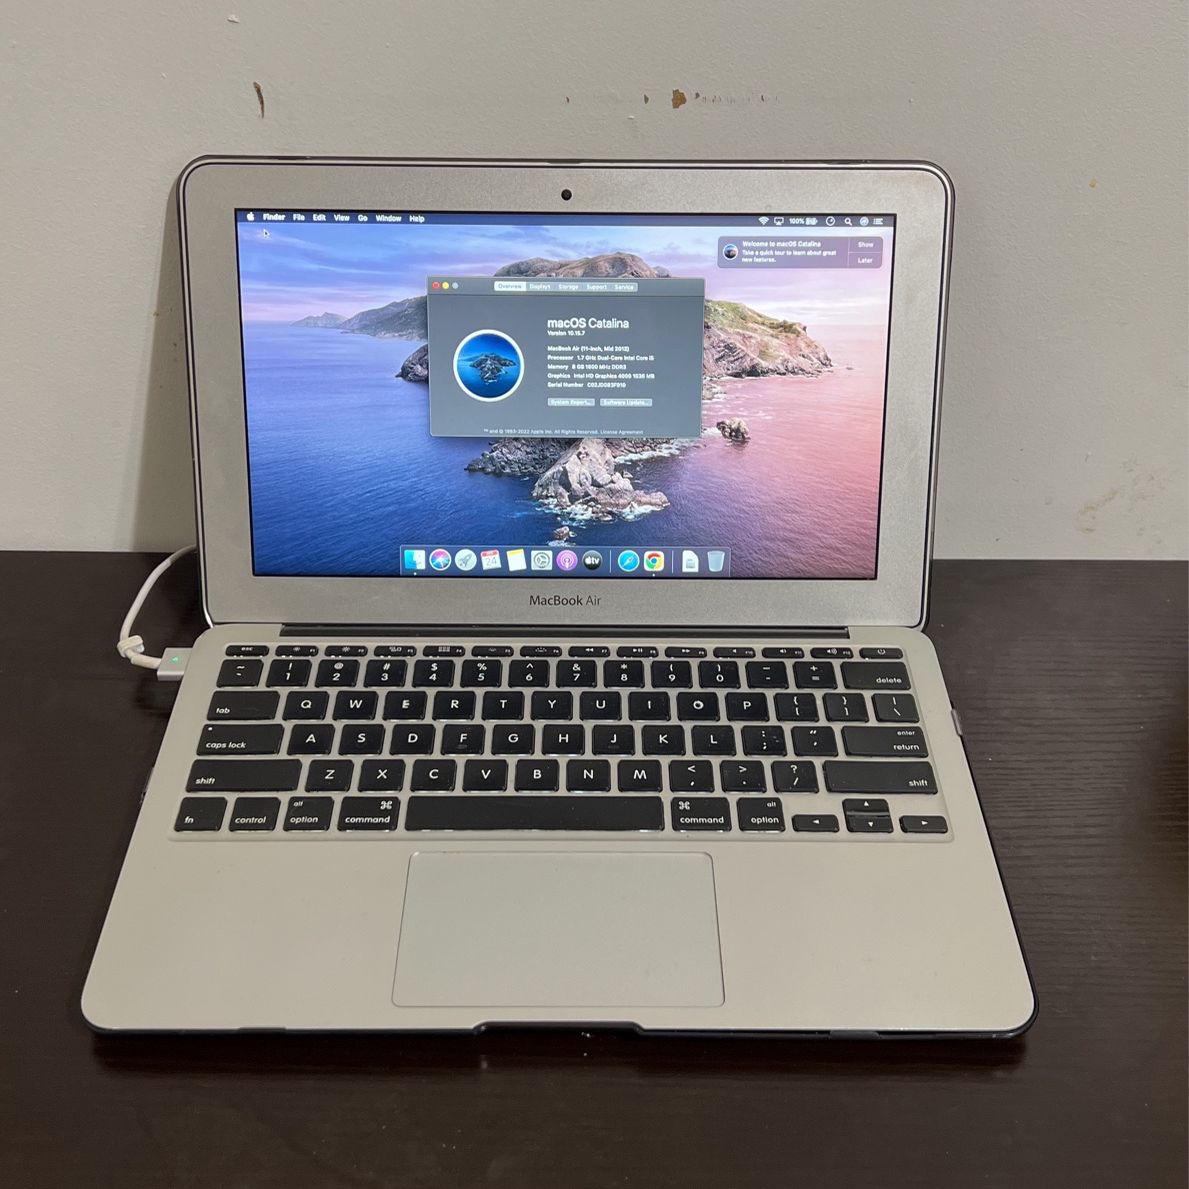 Macbook Air Laptop, 11 Inch, Mid 2012 - Works great!